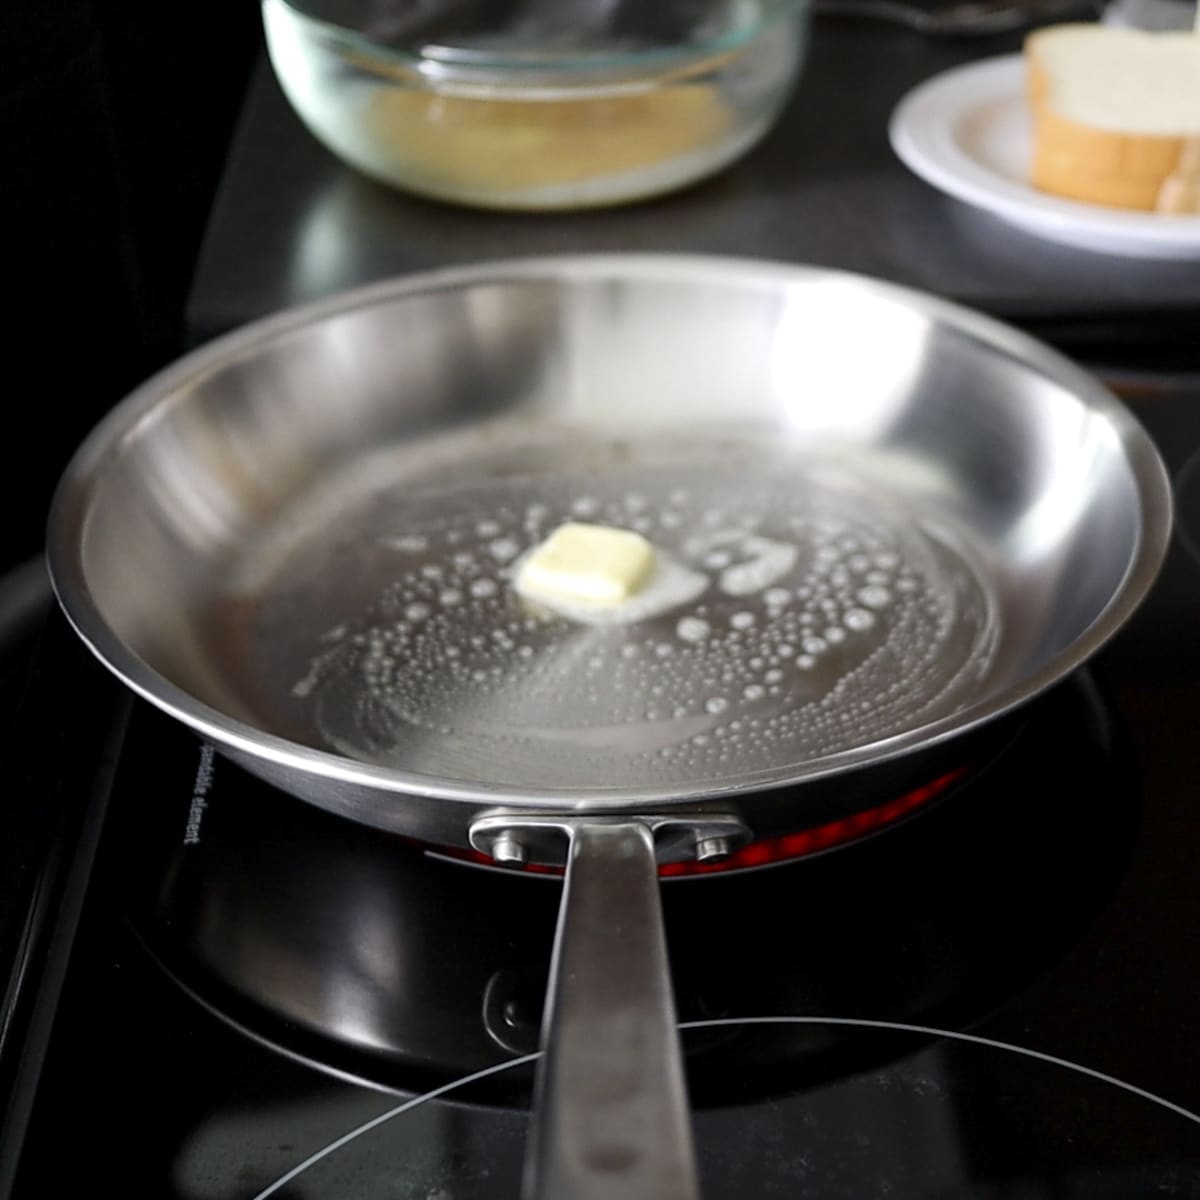 preheating the pan